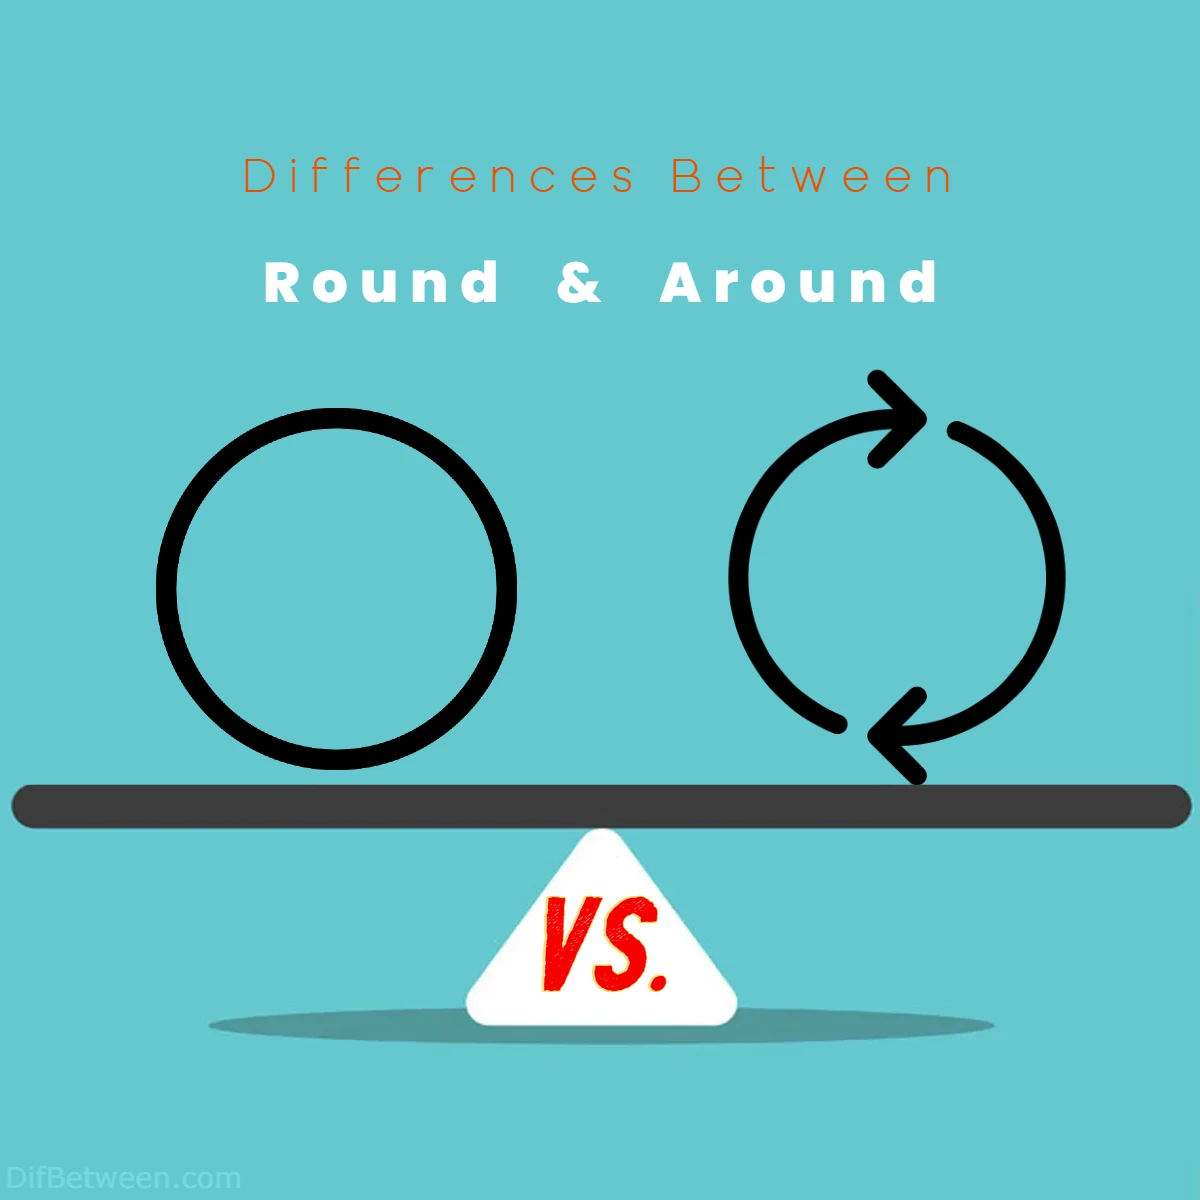 Differences Between Round vs Around